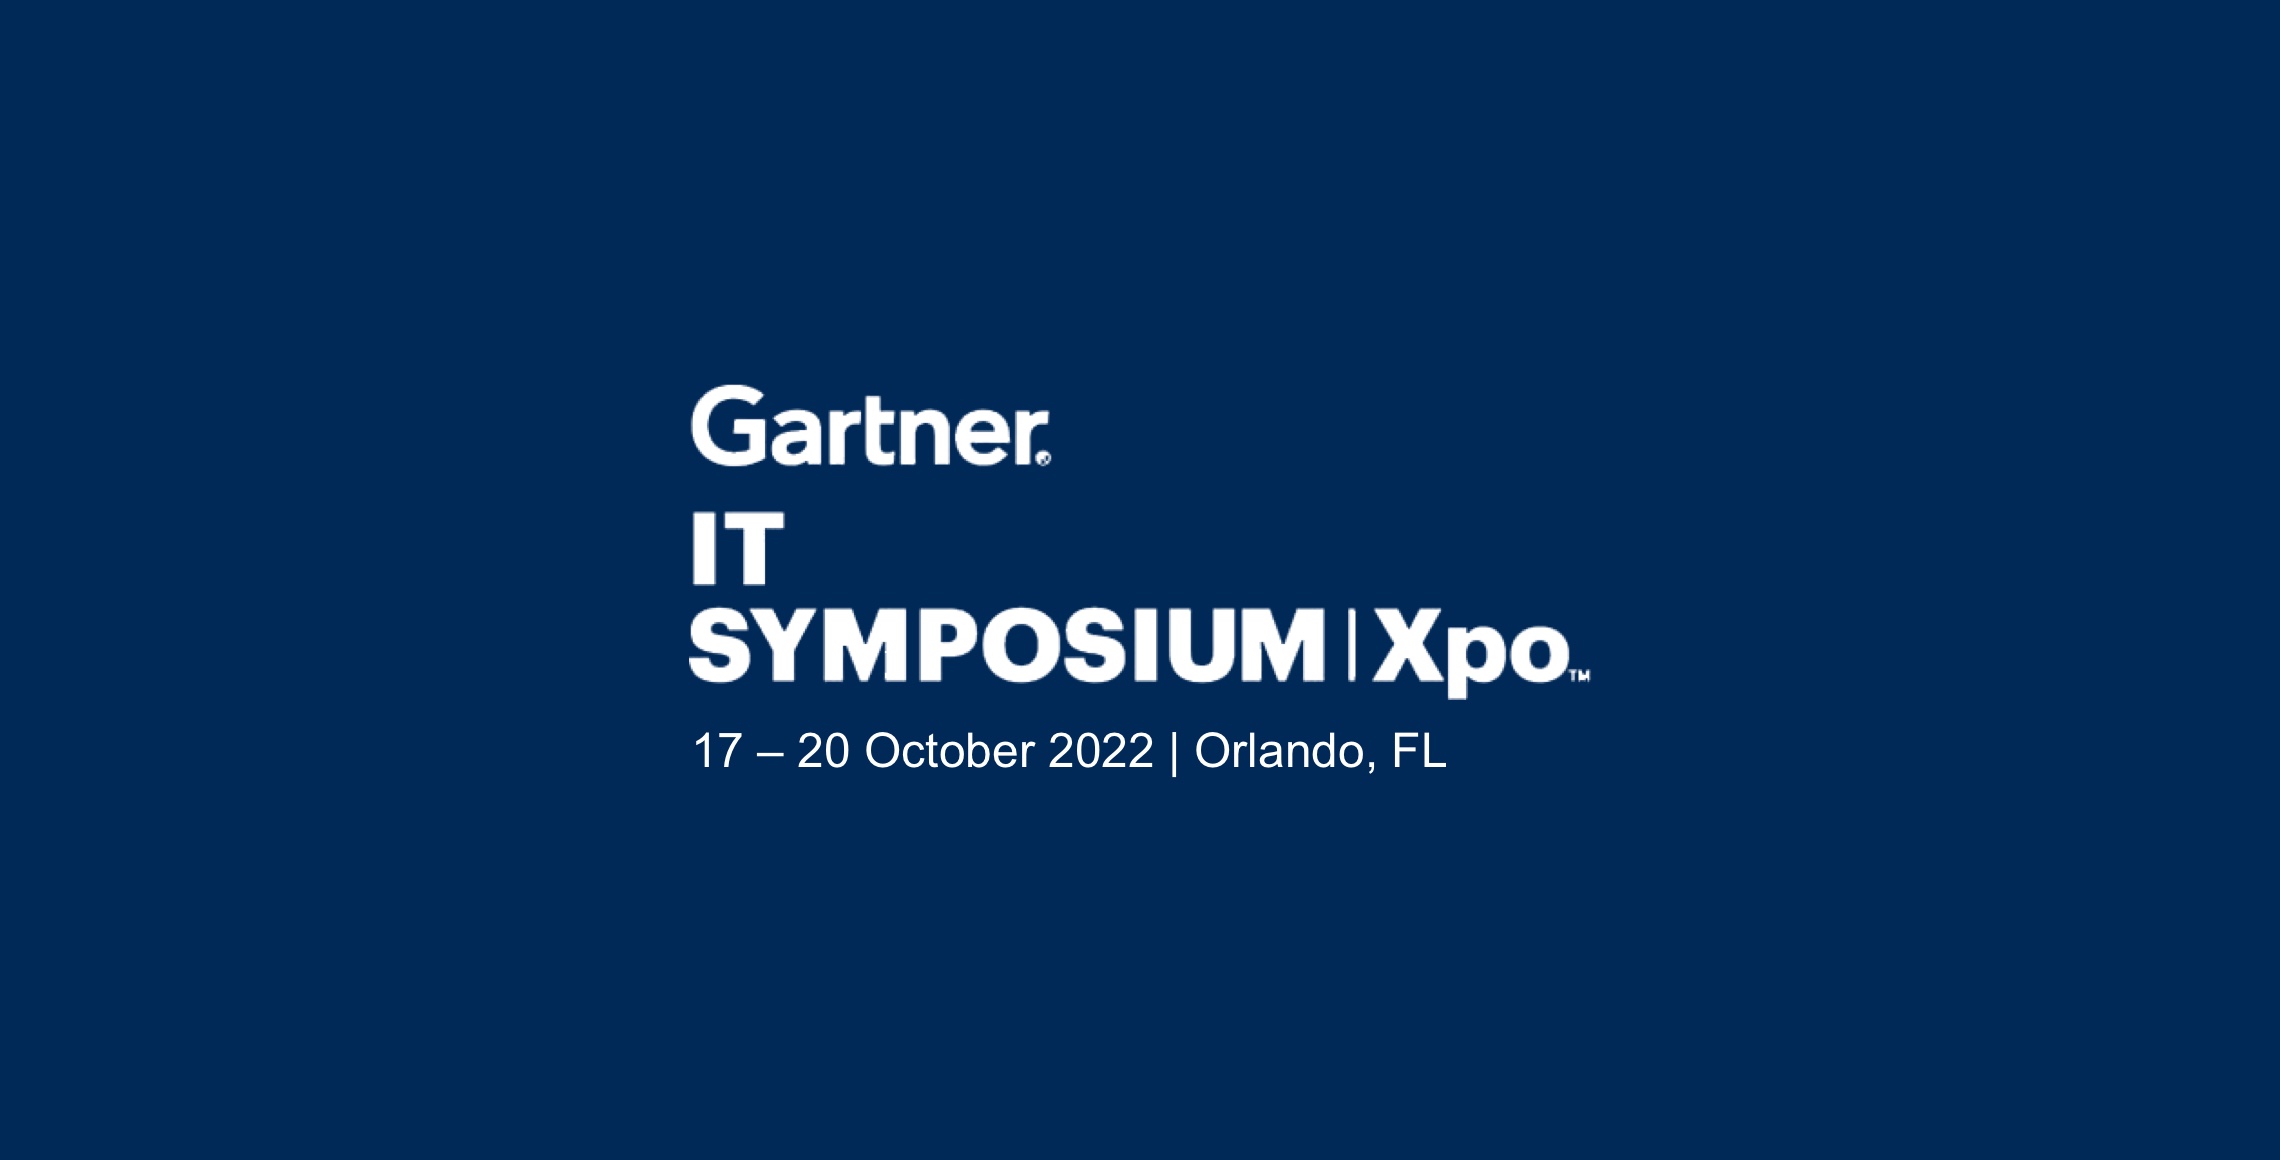 Gartner 2022 IT Symposium/Xpo Events Talkdesk